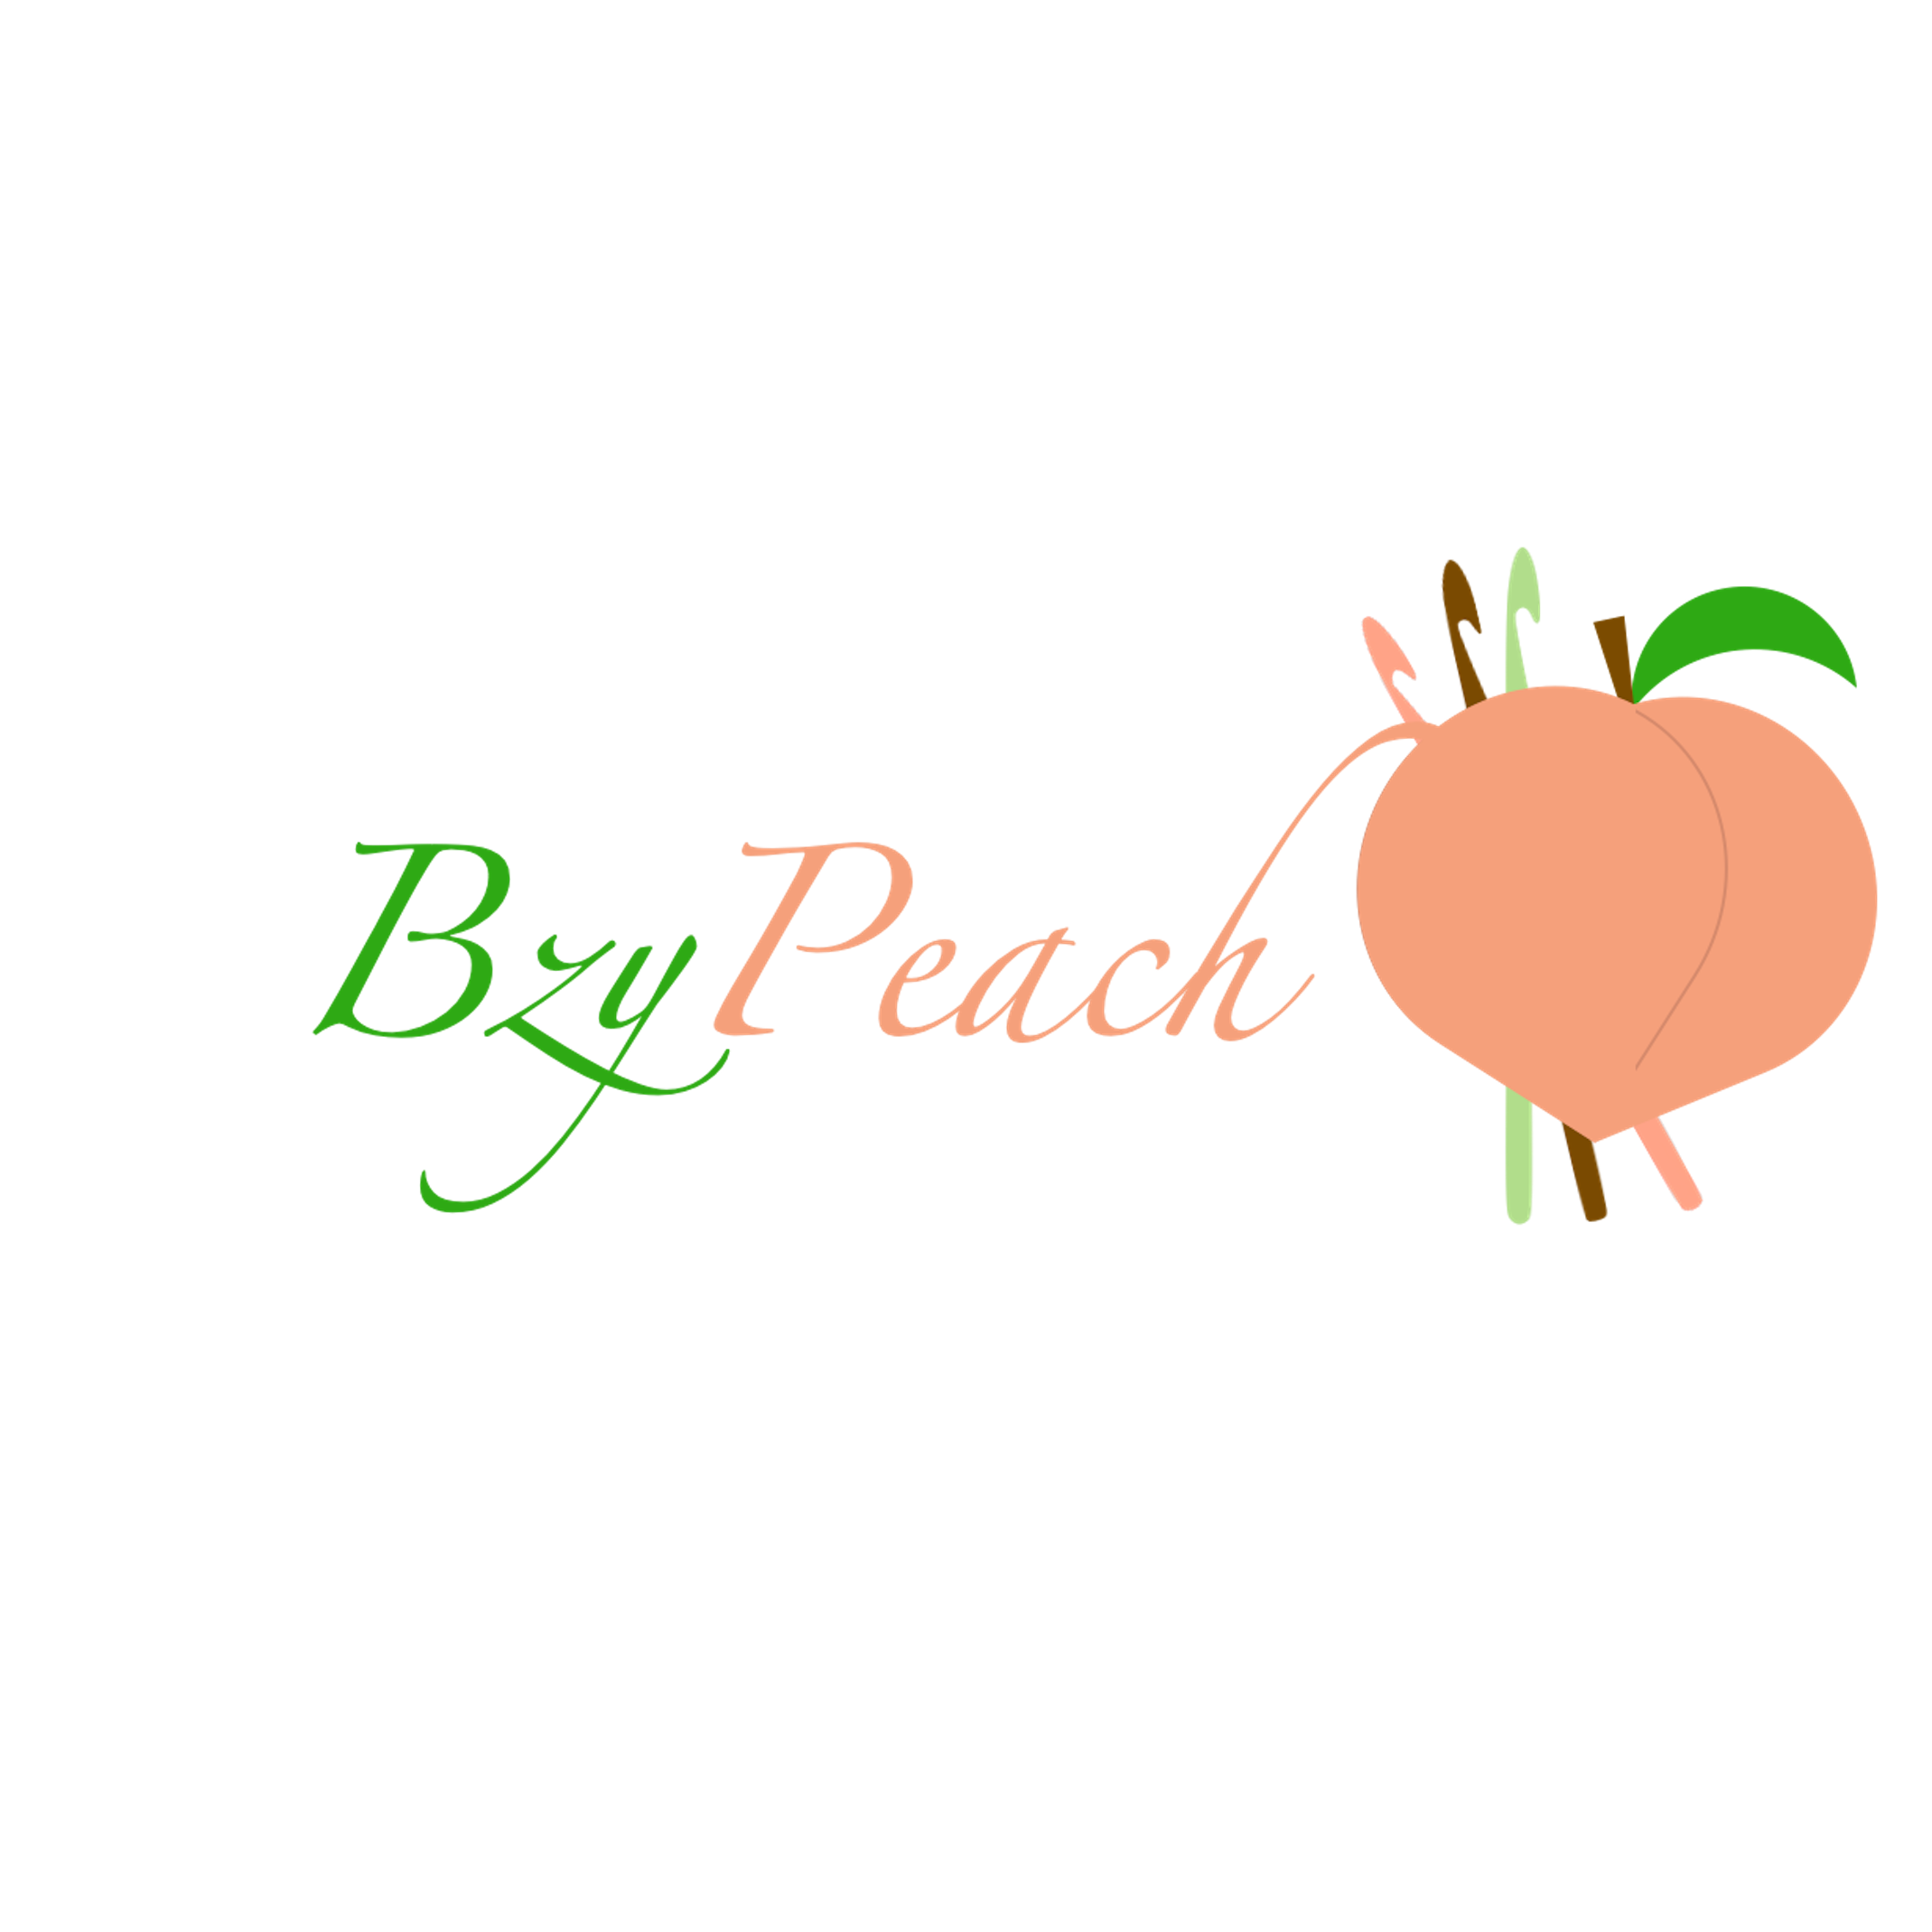 Laverne of Bzy Peach